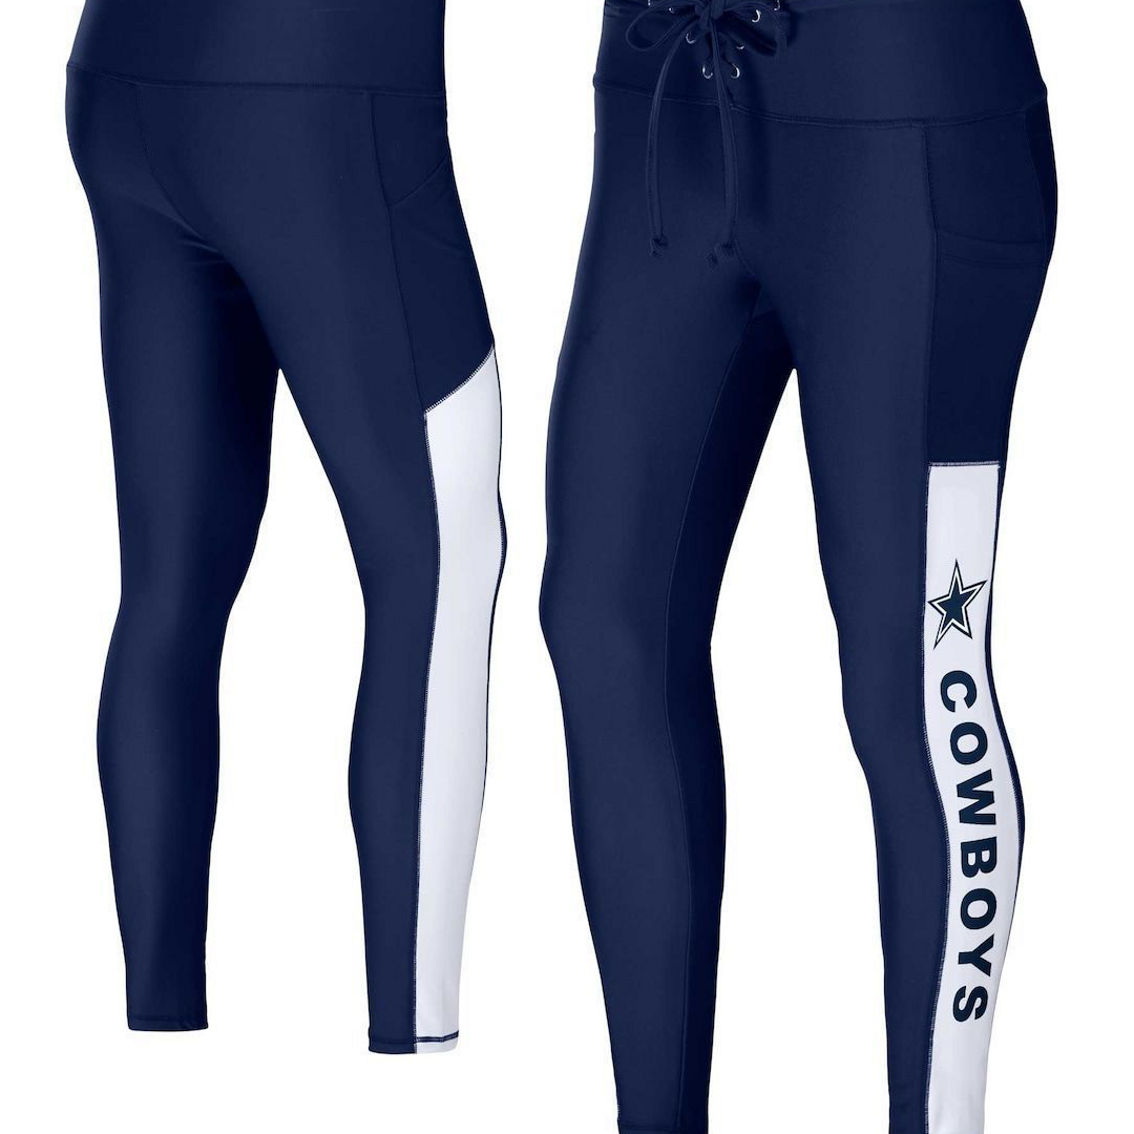 Wear By Erin Andrews Women's Navy Dallas Cowboys Leggings